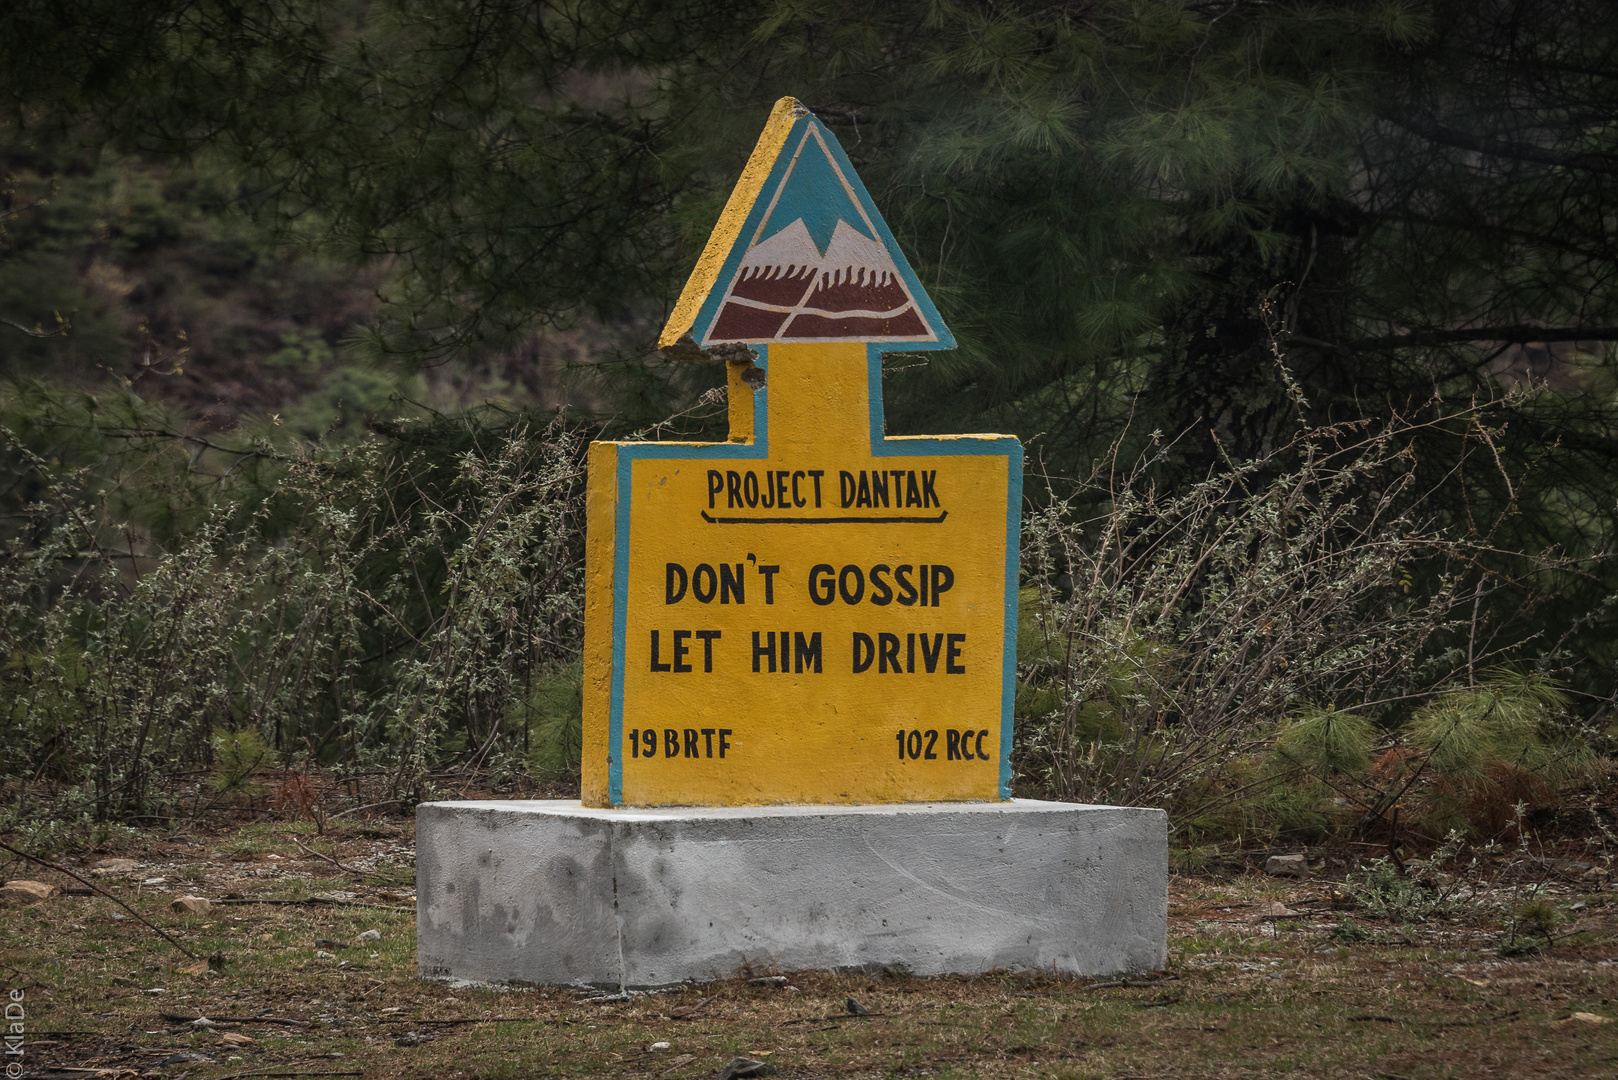 Bjutan - Don't be gossip - let him drive.